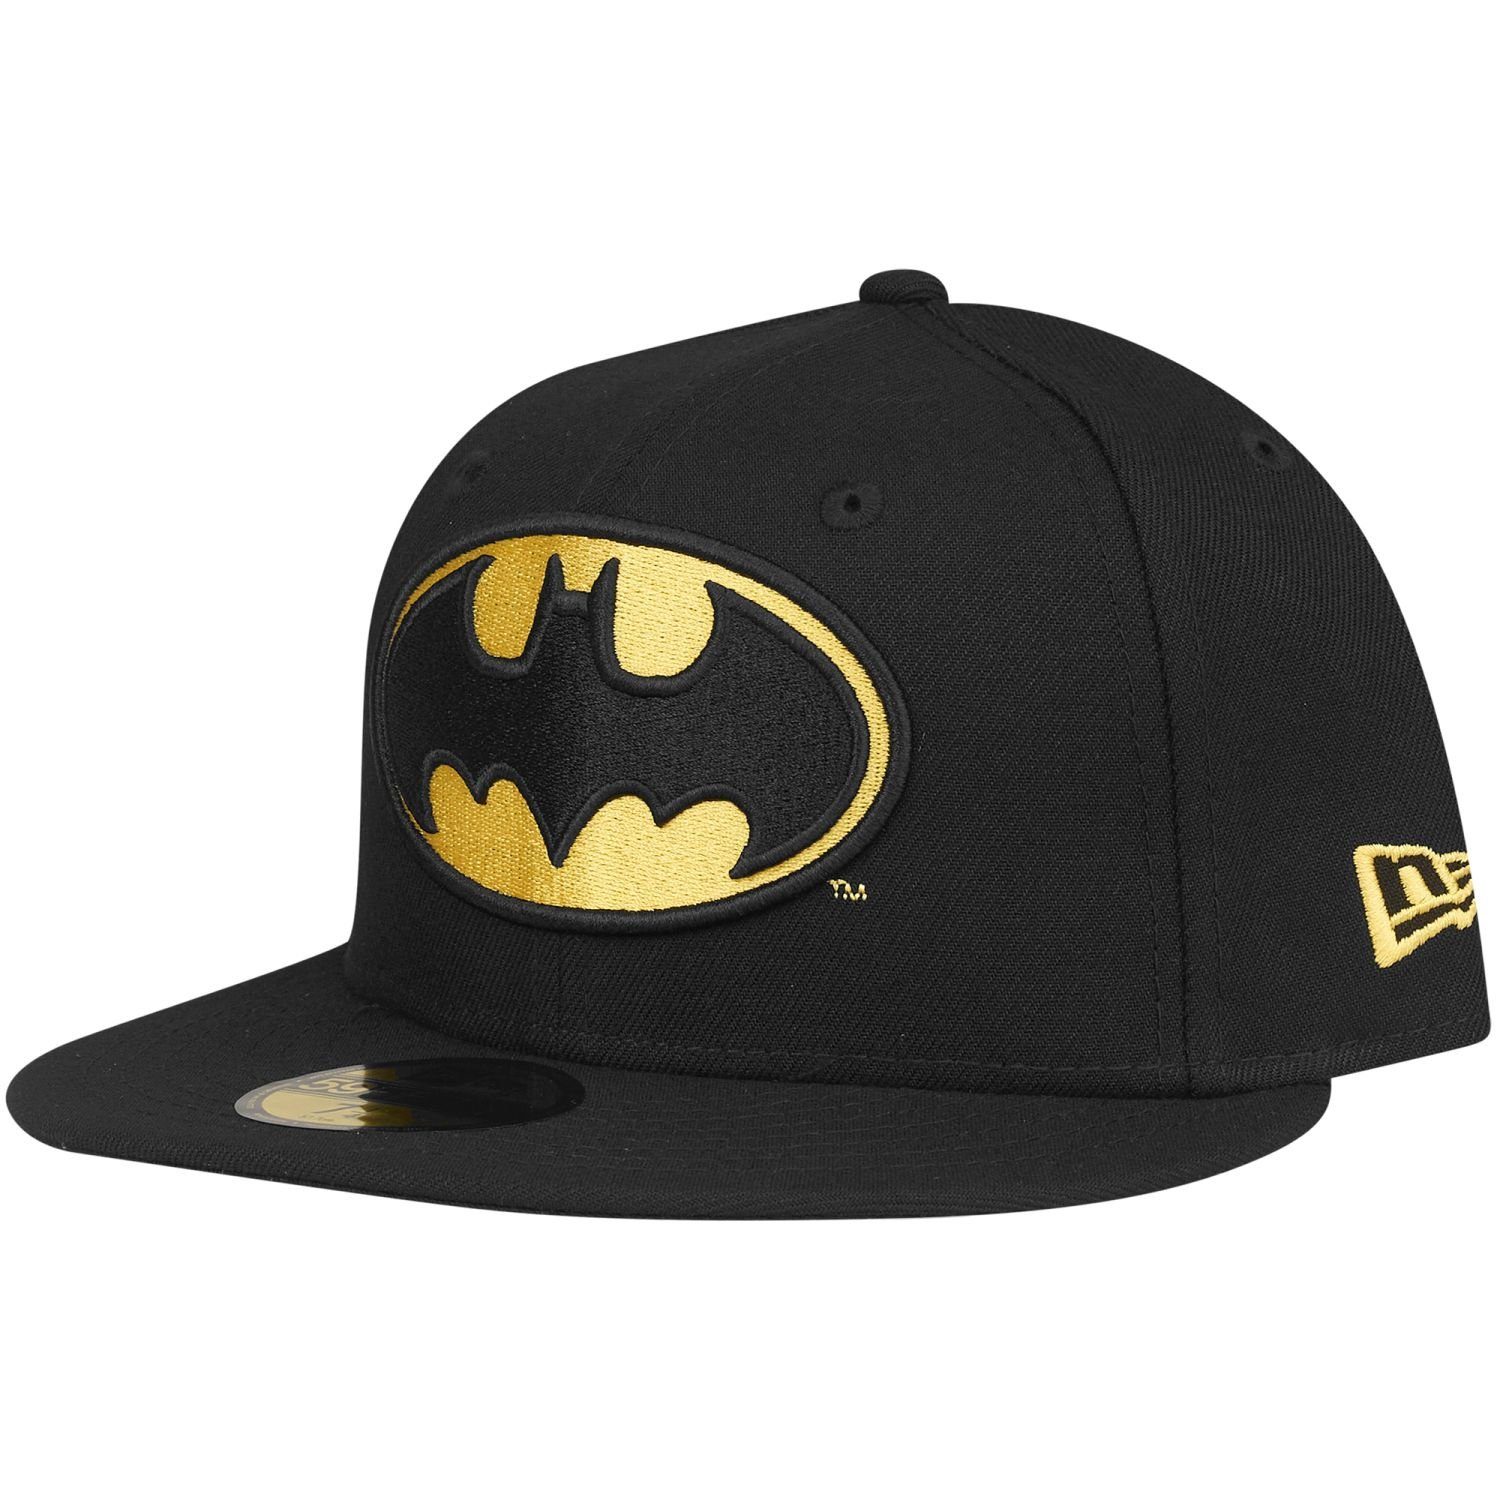 New Era Fitted Cap 59Fifty MOONBEAM Batman | Fitted Caps